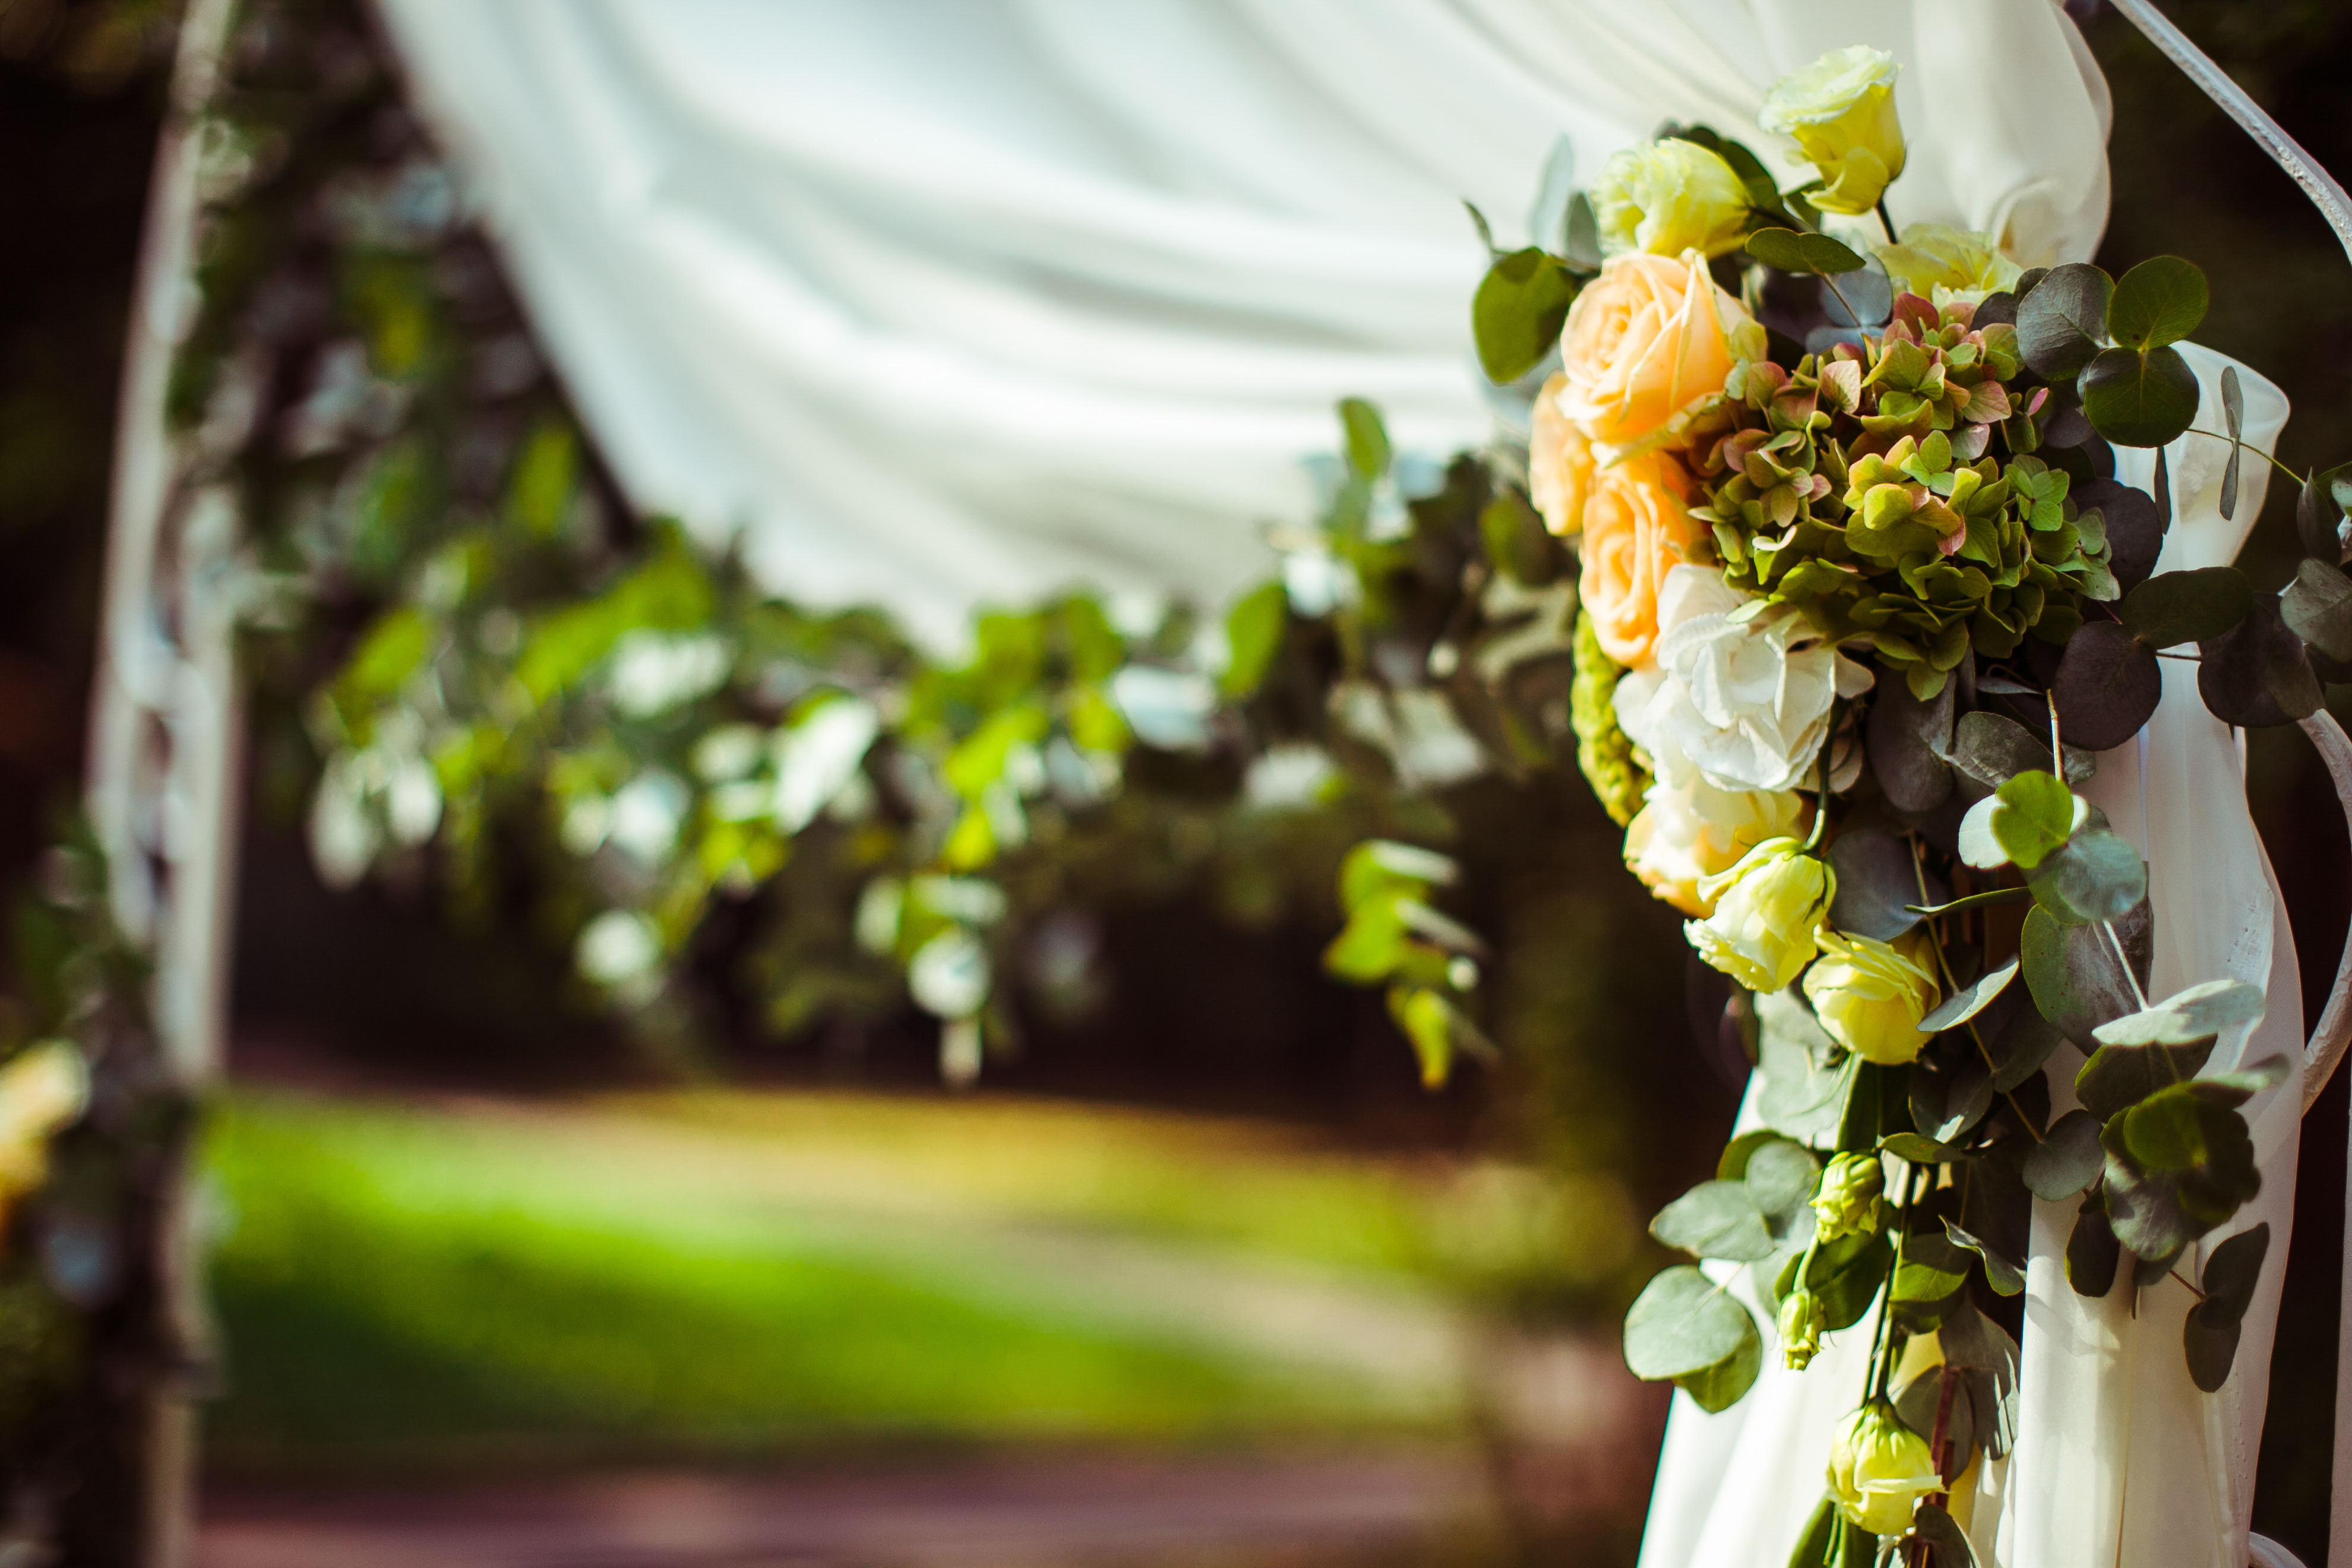 Wedding altar | Source: Shutterstock